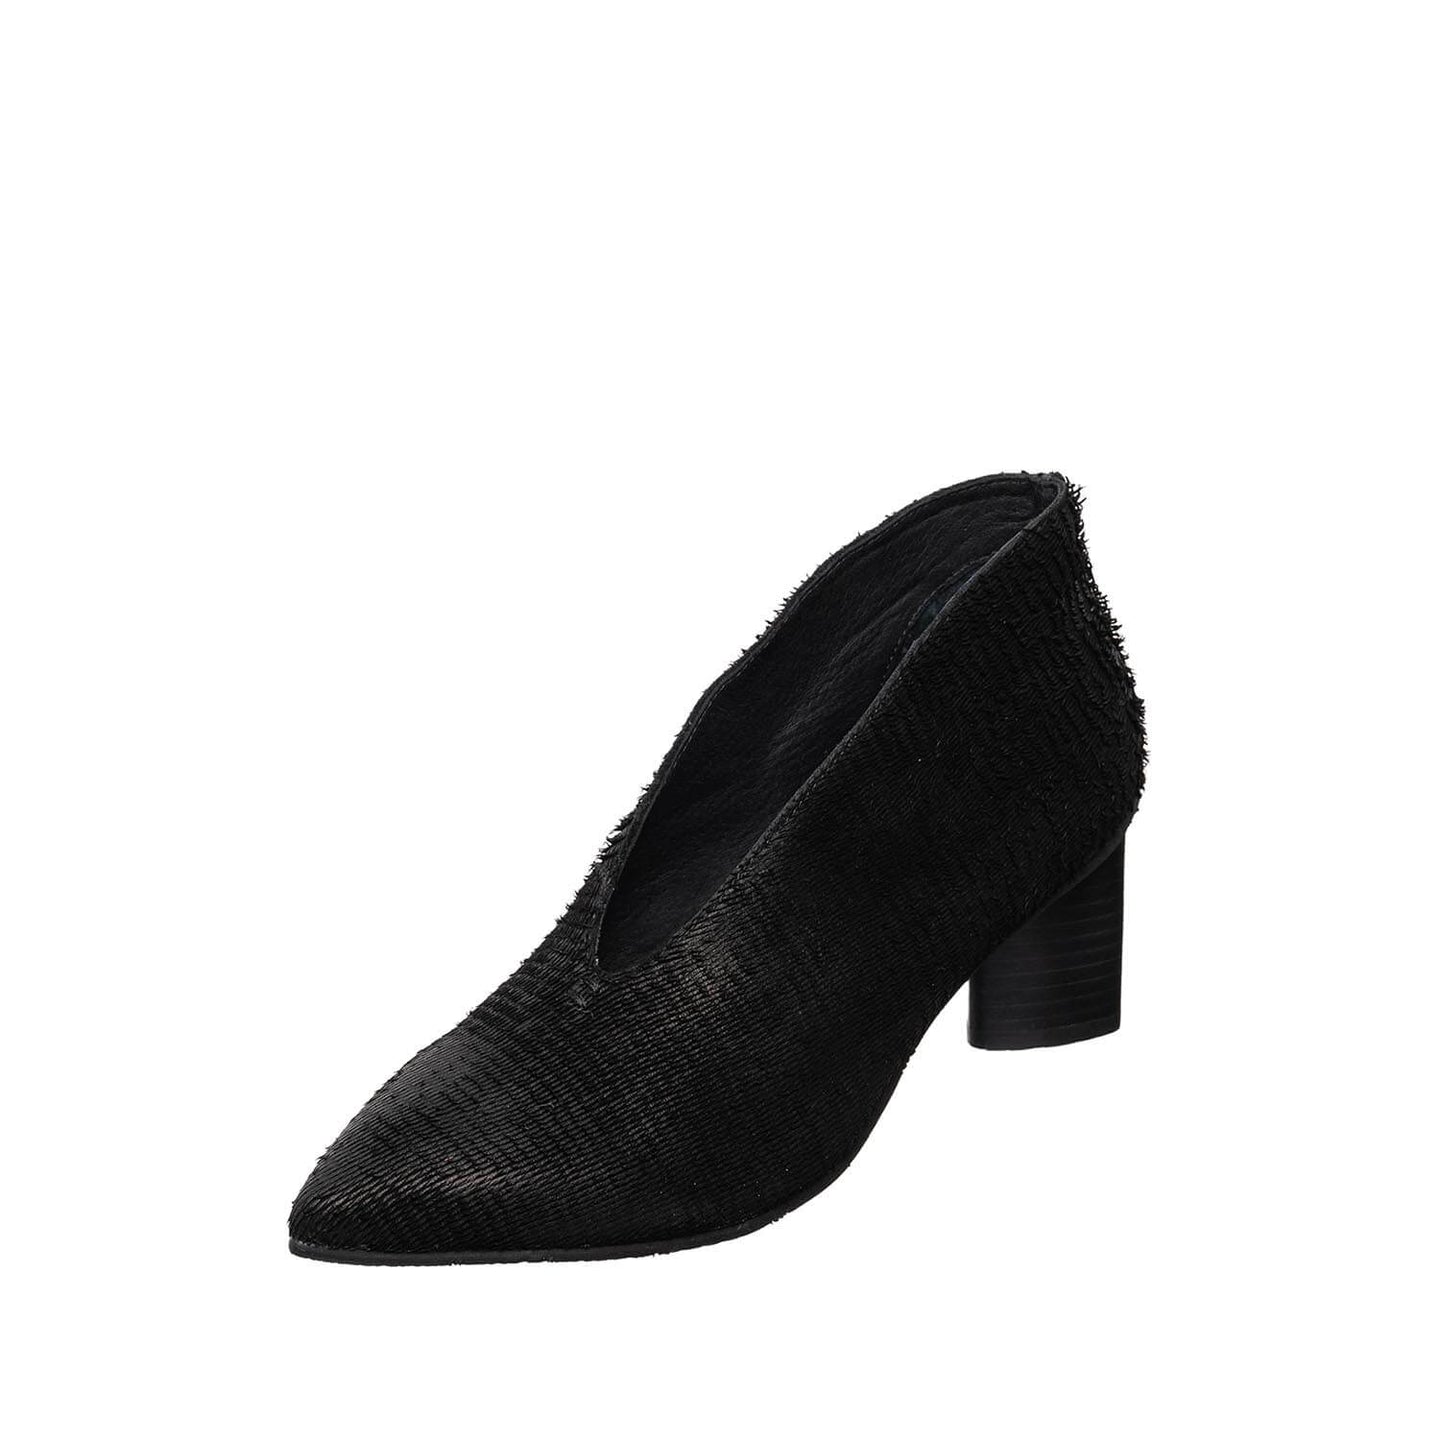 Q21 Hilde Comfortable Heel Shoes for Women - Black